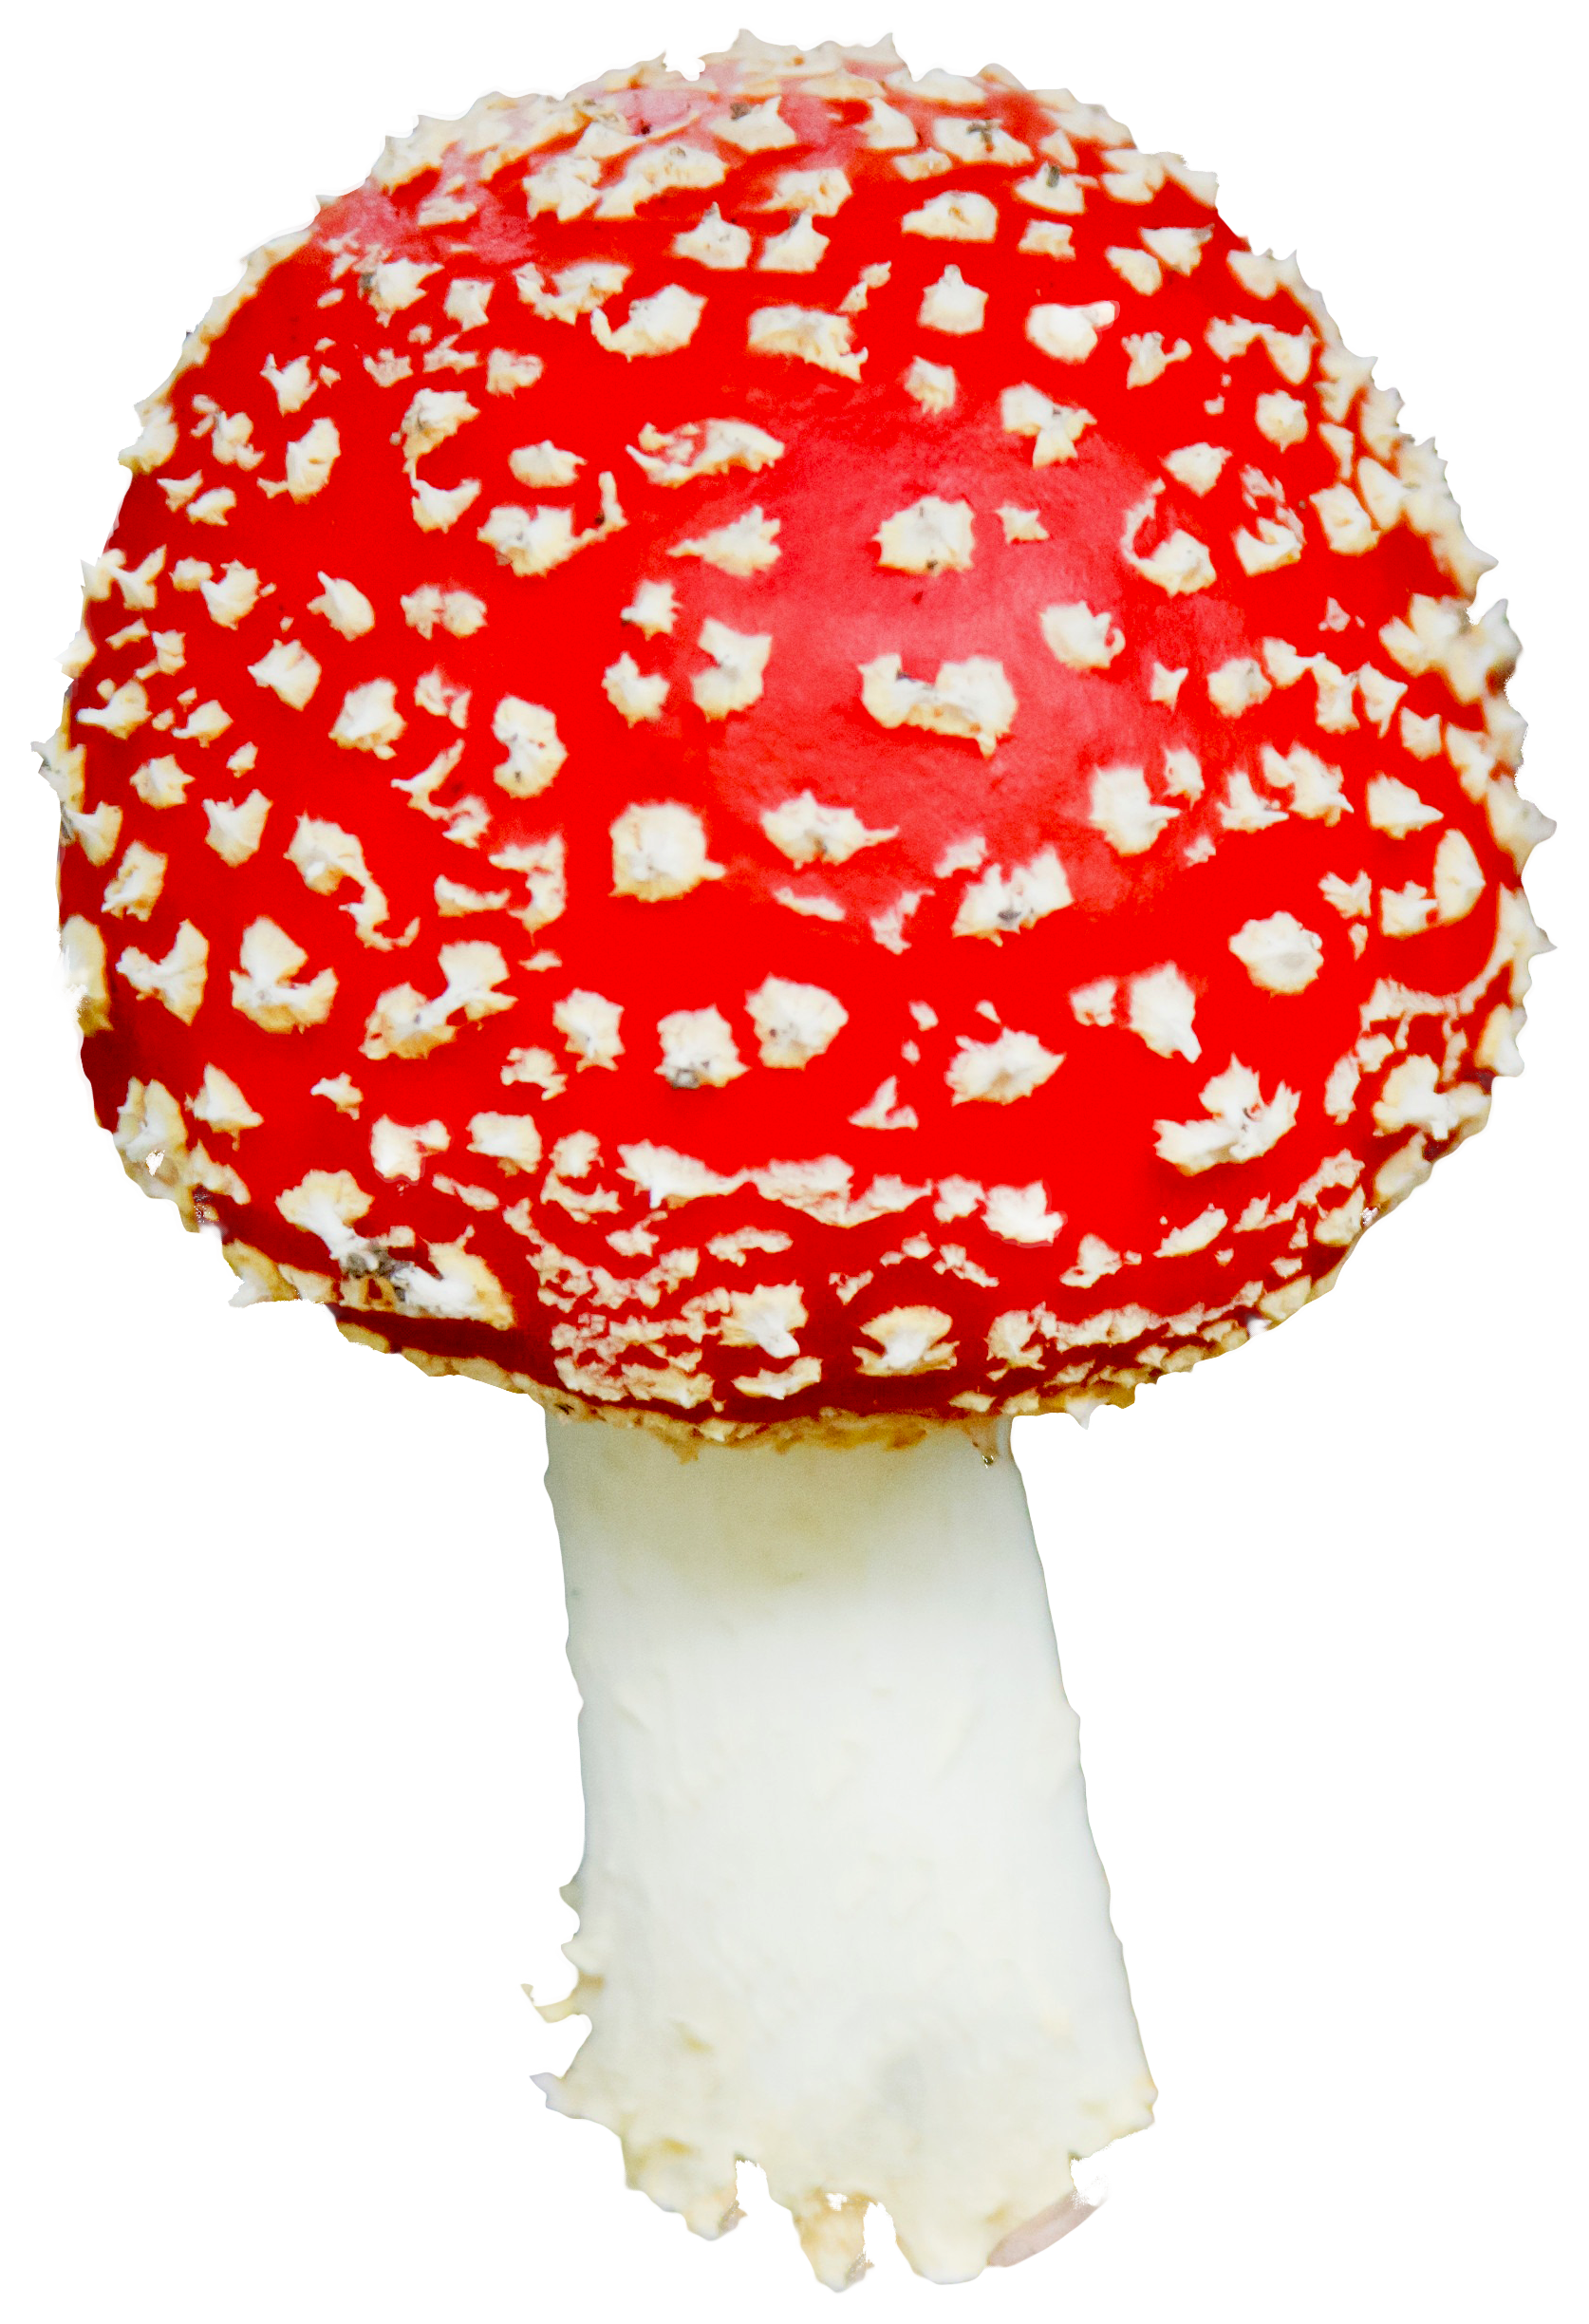 Mushroom PNG - 24331